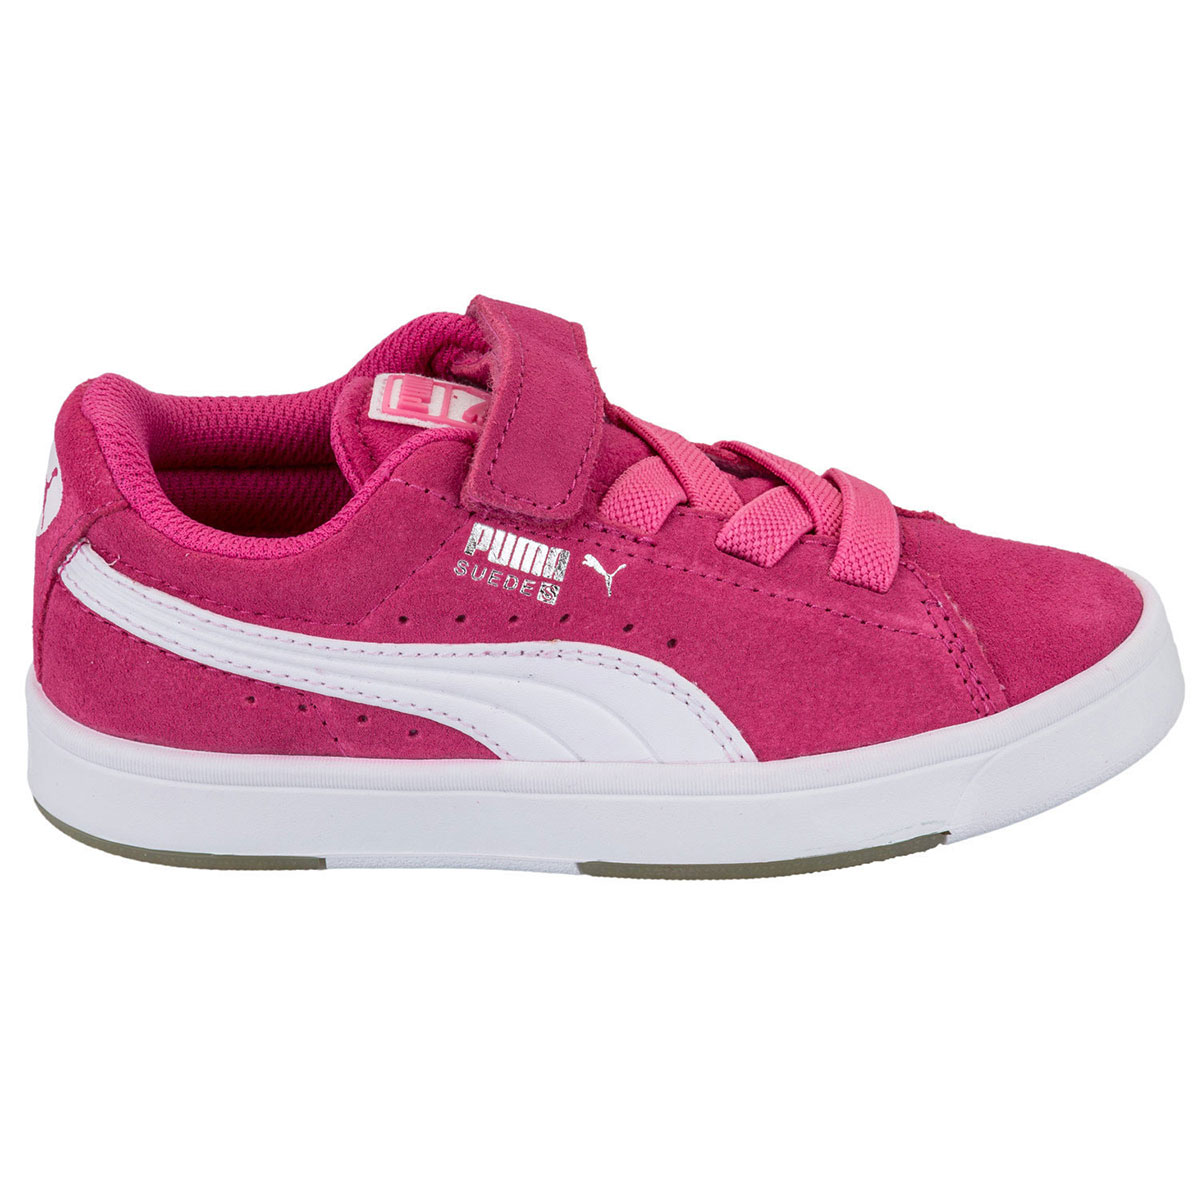 Puma Suede Sv Kids pink  359452-11